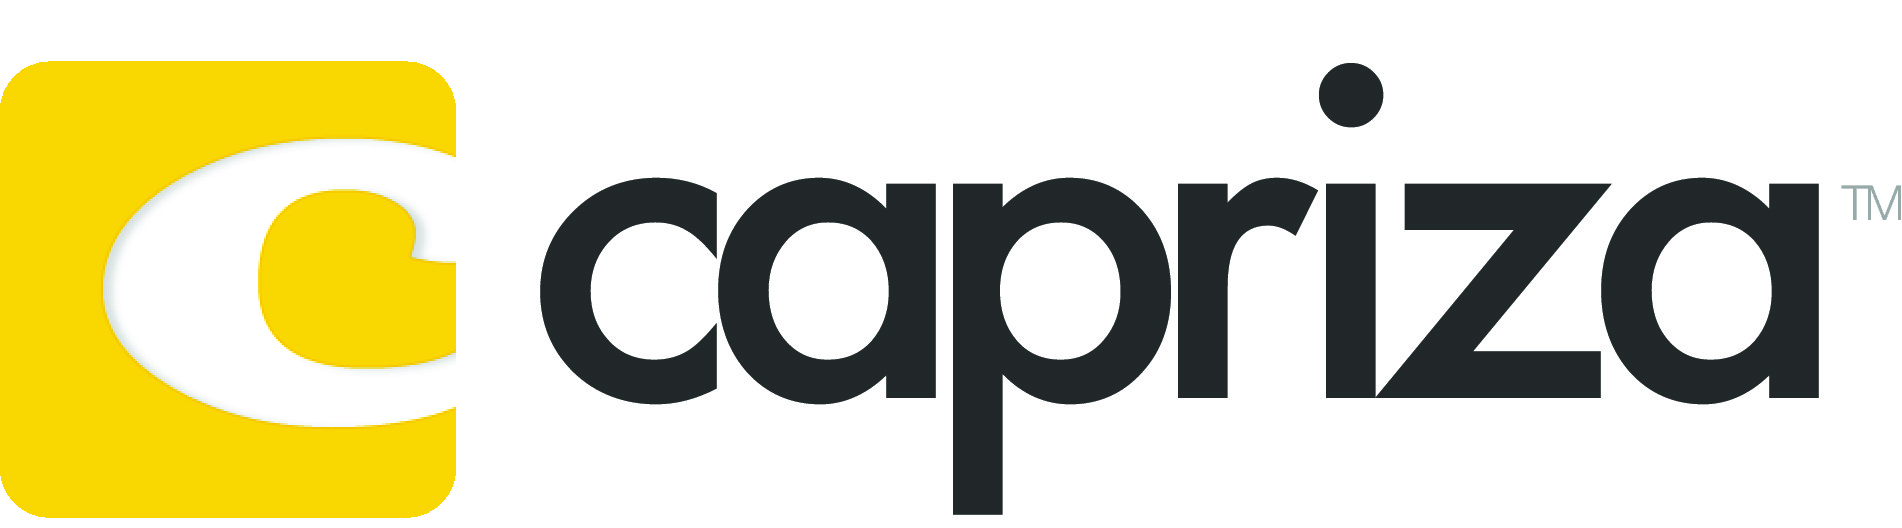 Capriza Logo PNG - 30398